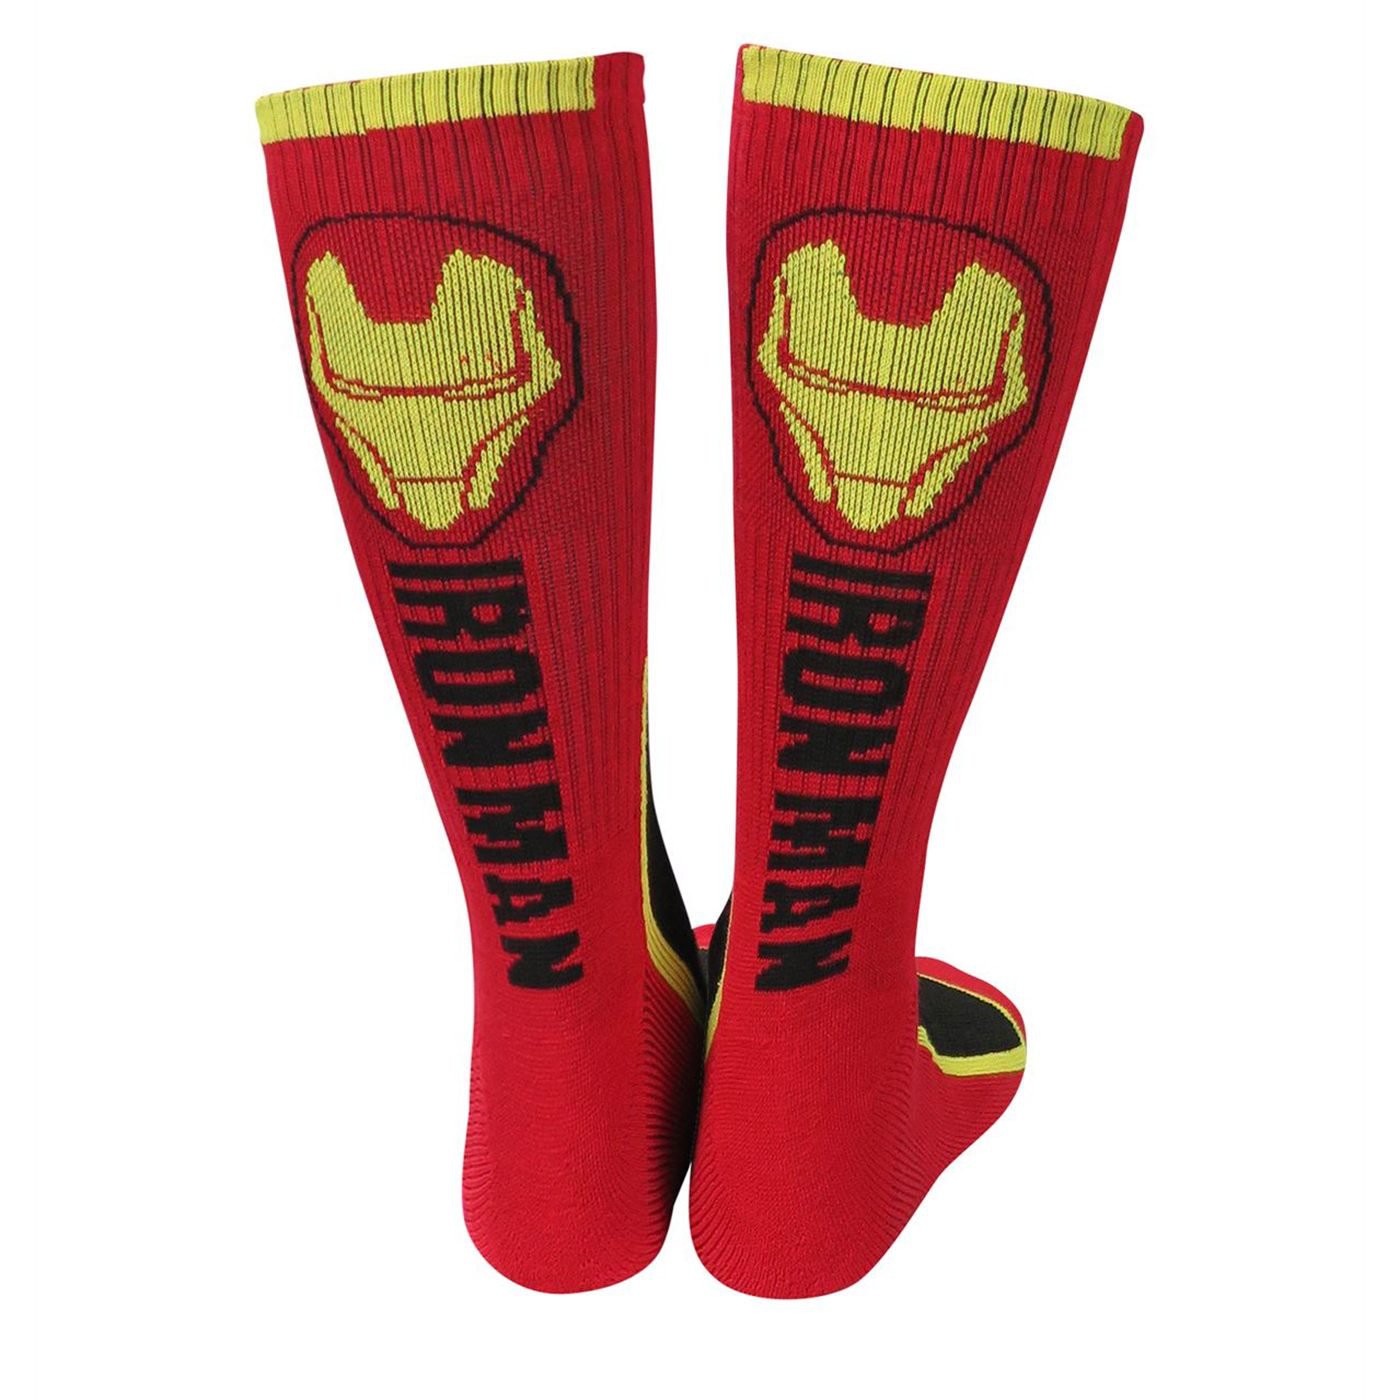 Iron Man Two-Tone Athletic Crew Socks